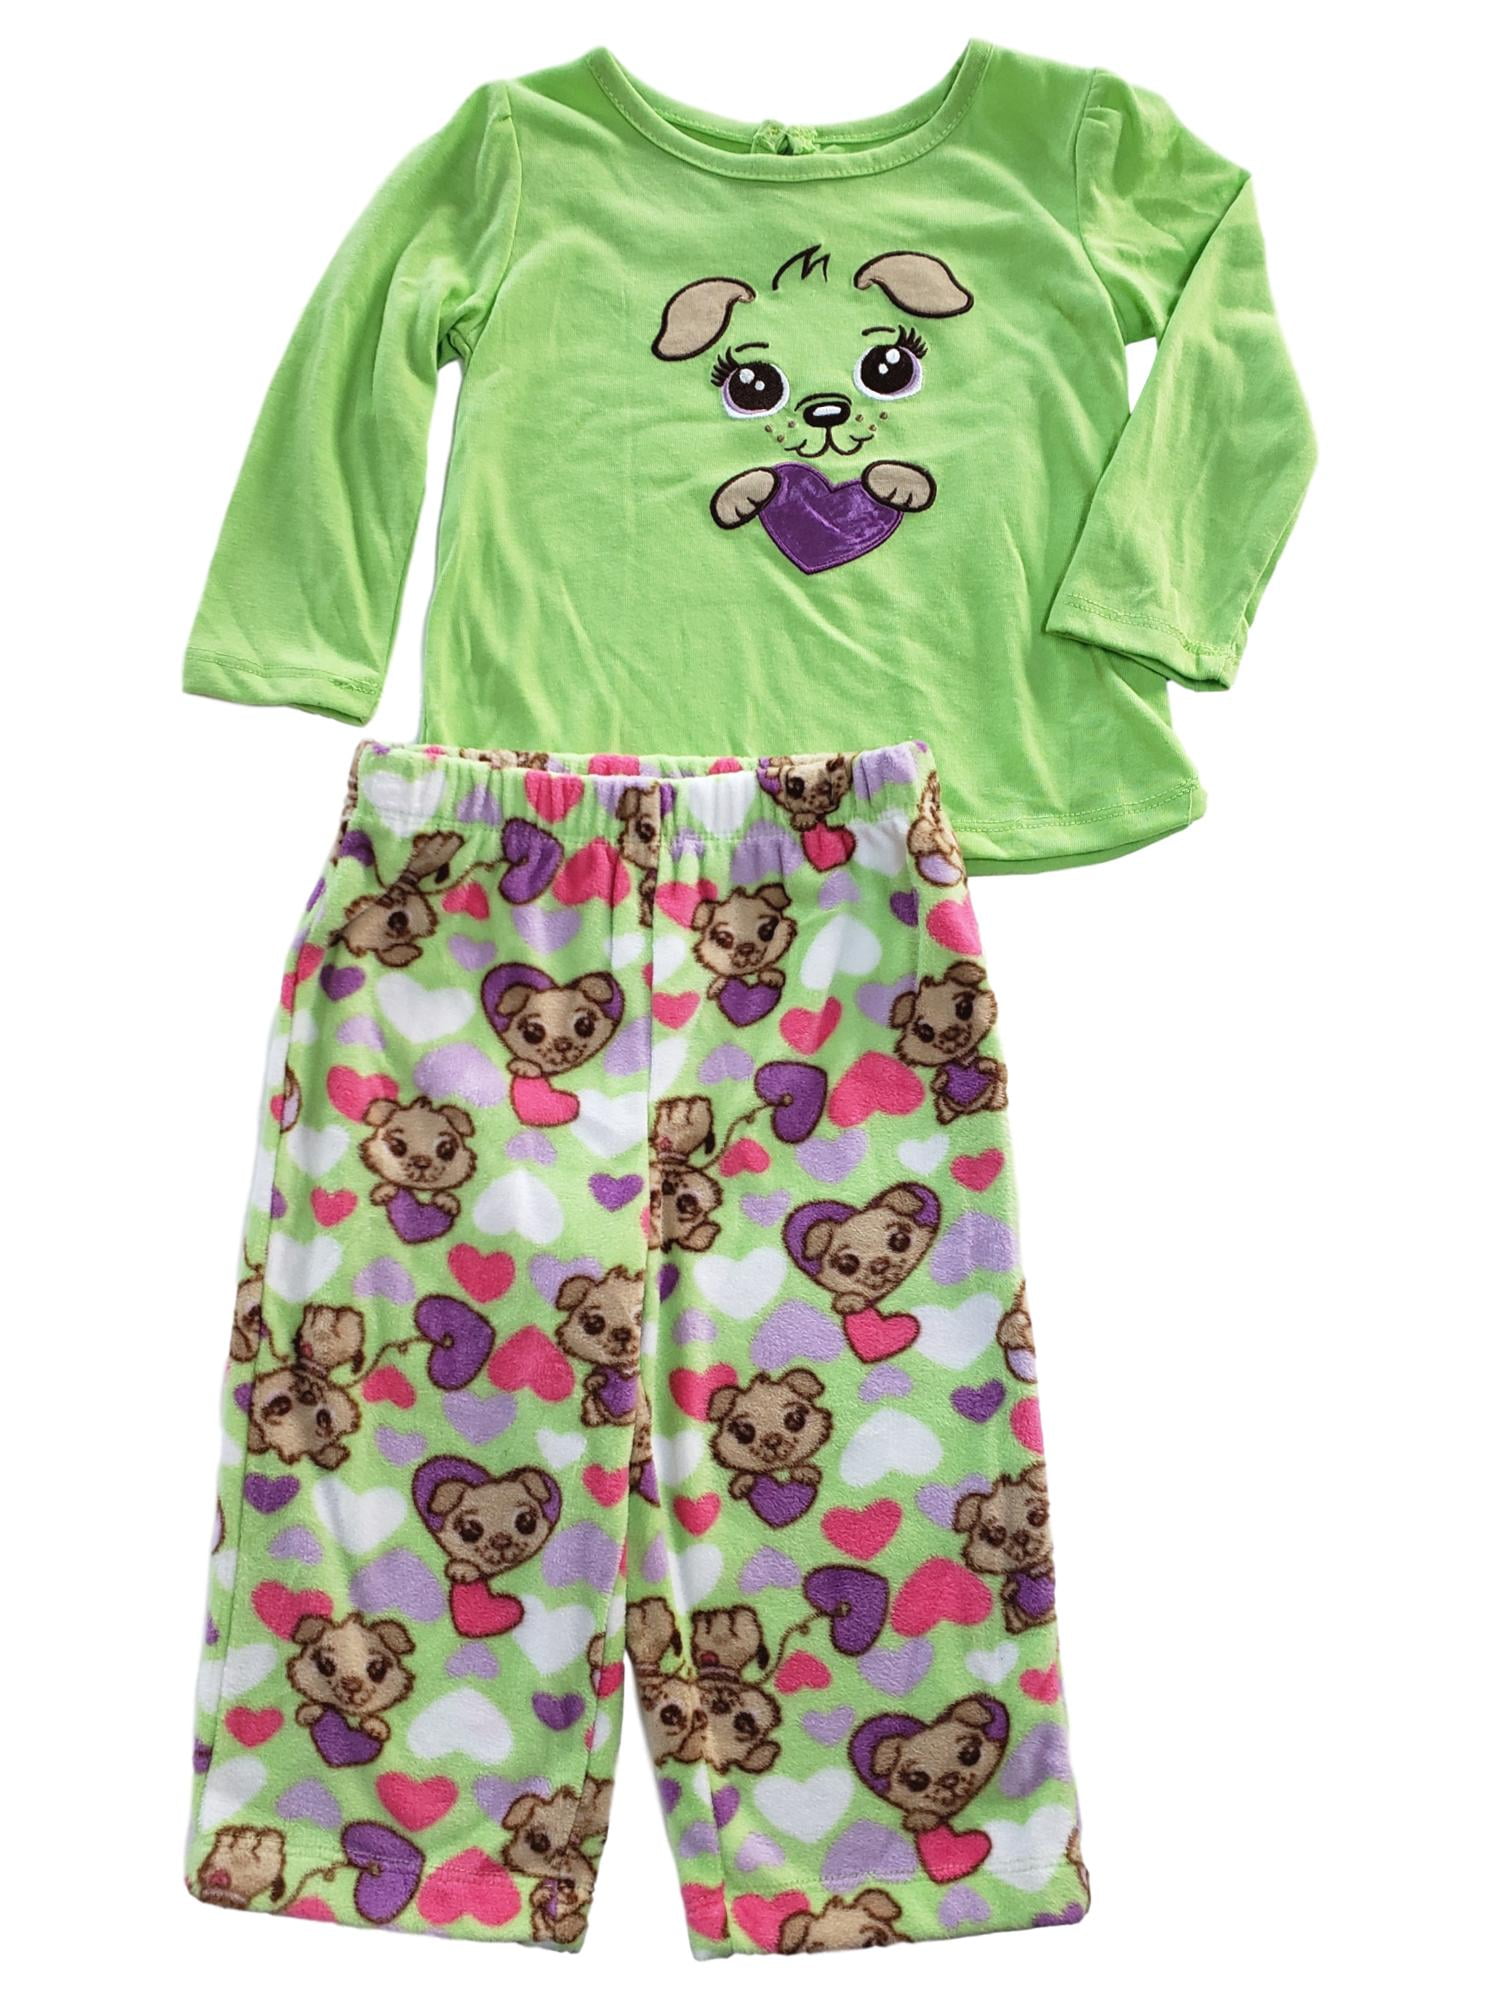 Girls Joe Boxer Pajamas Fleece Long Sleeve Set Dogs and Cats Unicorns Frogs New 